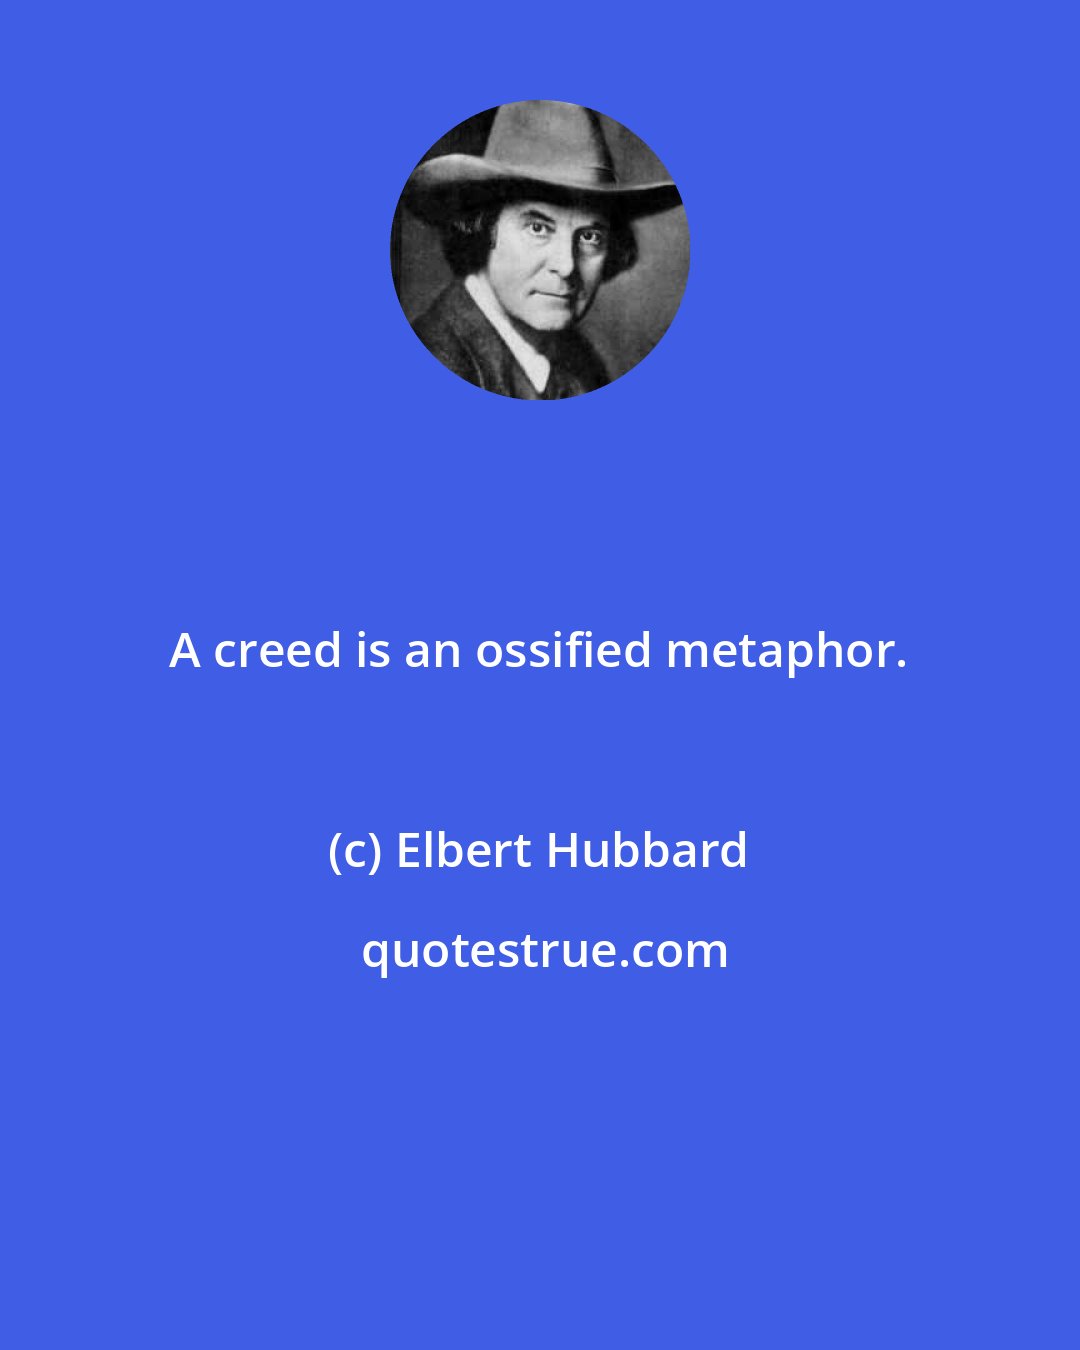 Elbert Hubbard: A creed is an ossified metaphor.